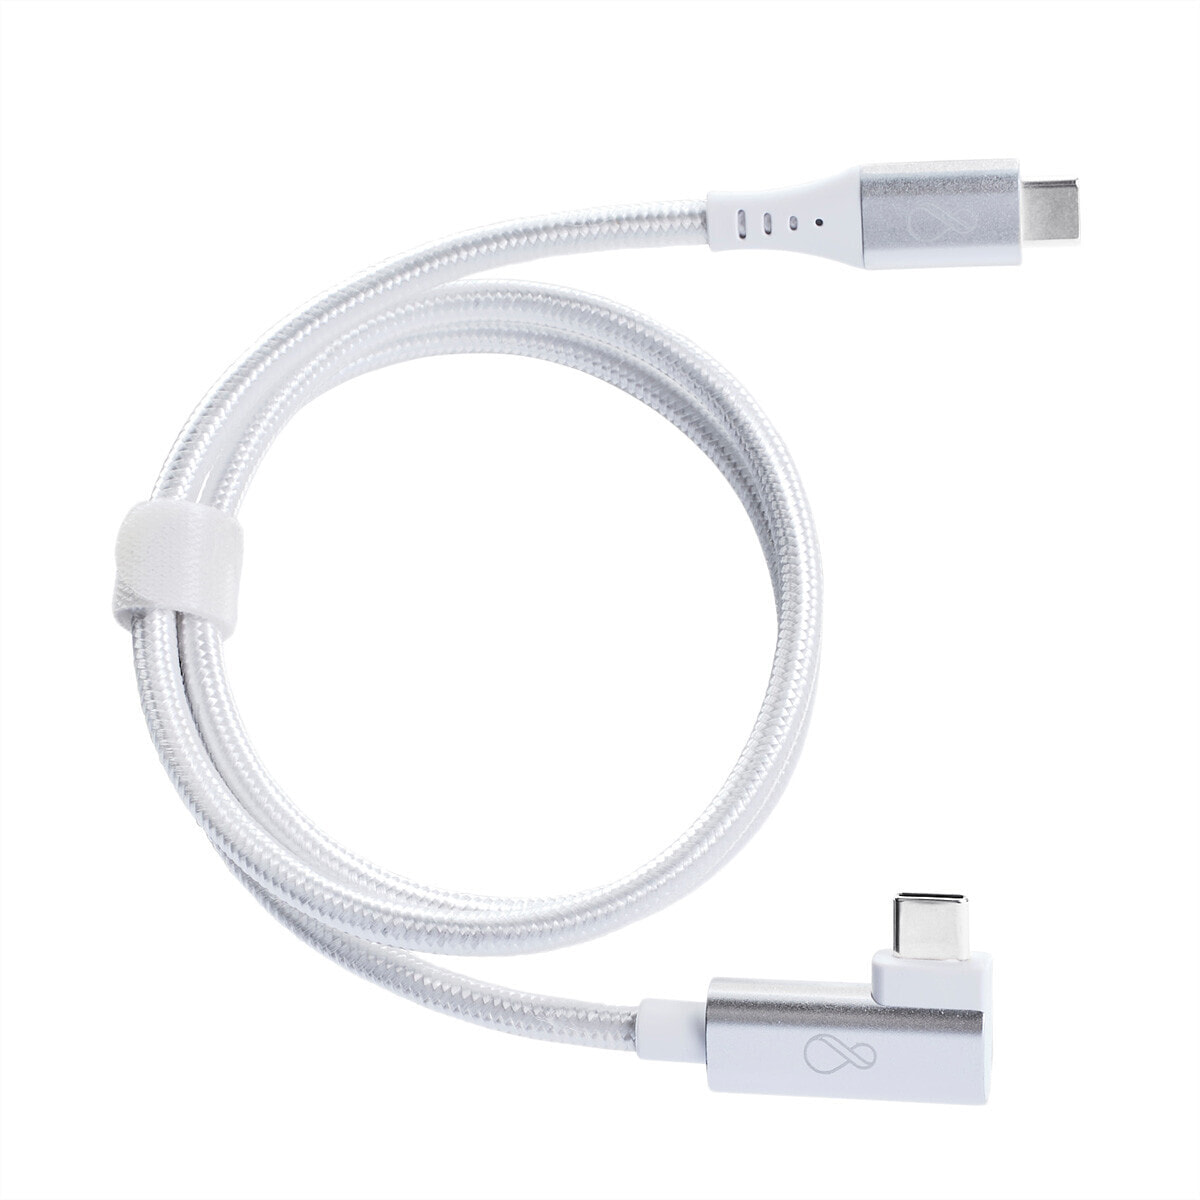 Ochno USB-C Kabel gewinkelt 0.7m silber - Cable - Digital